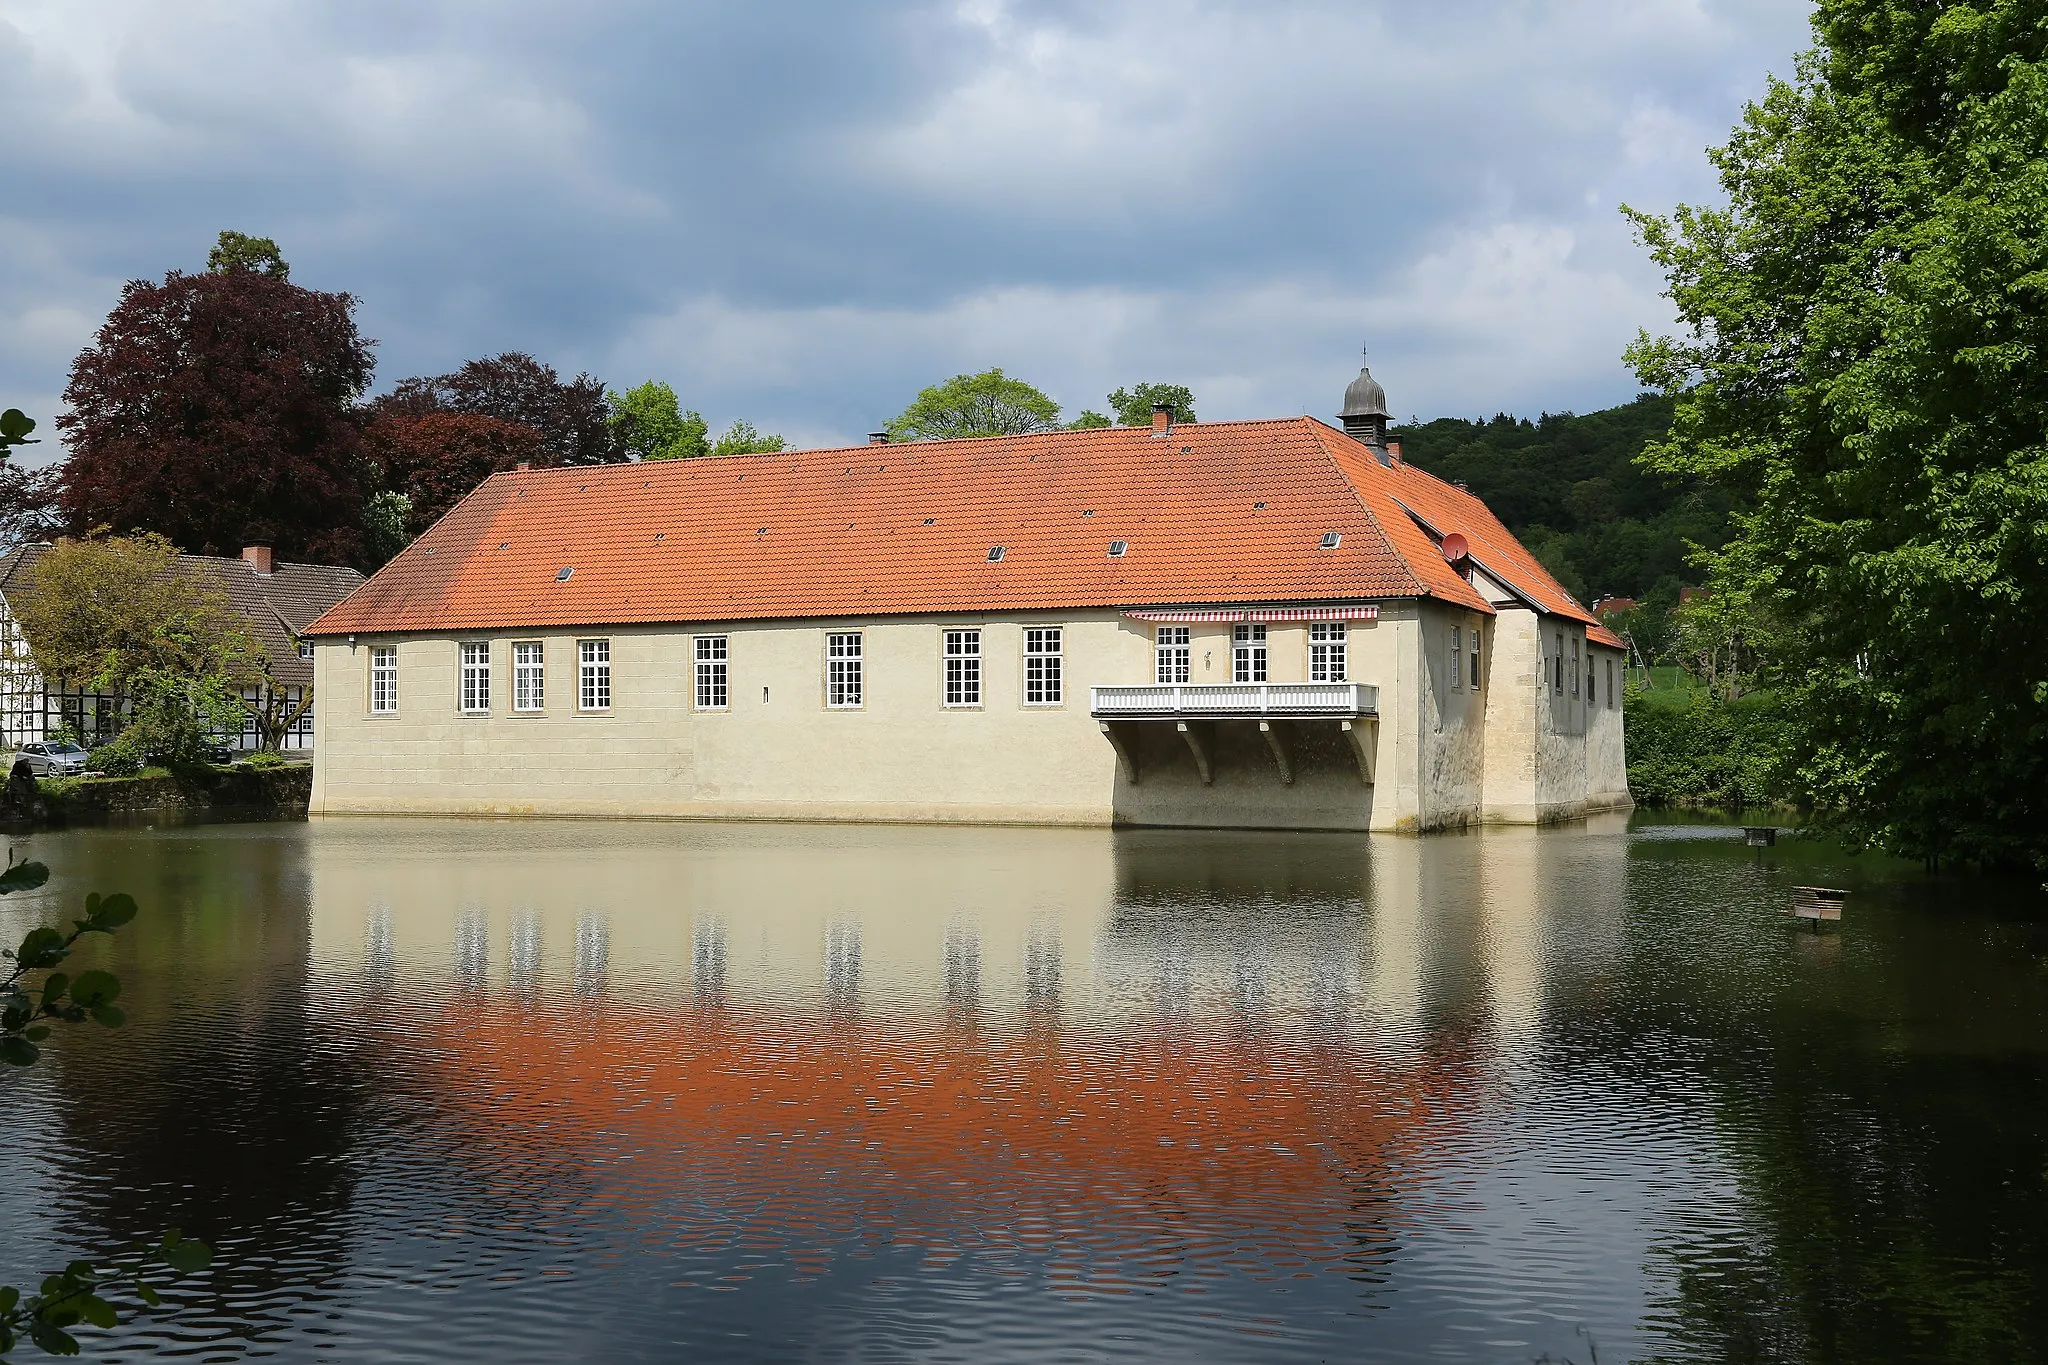 Photo showing: The Marck House water castle (Wasserschloss Haus Marck) near Tecklenburg, Kreis Steinfurt, North Rhine-Westphalia, Germany.